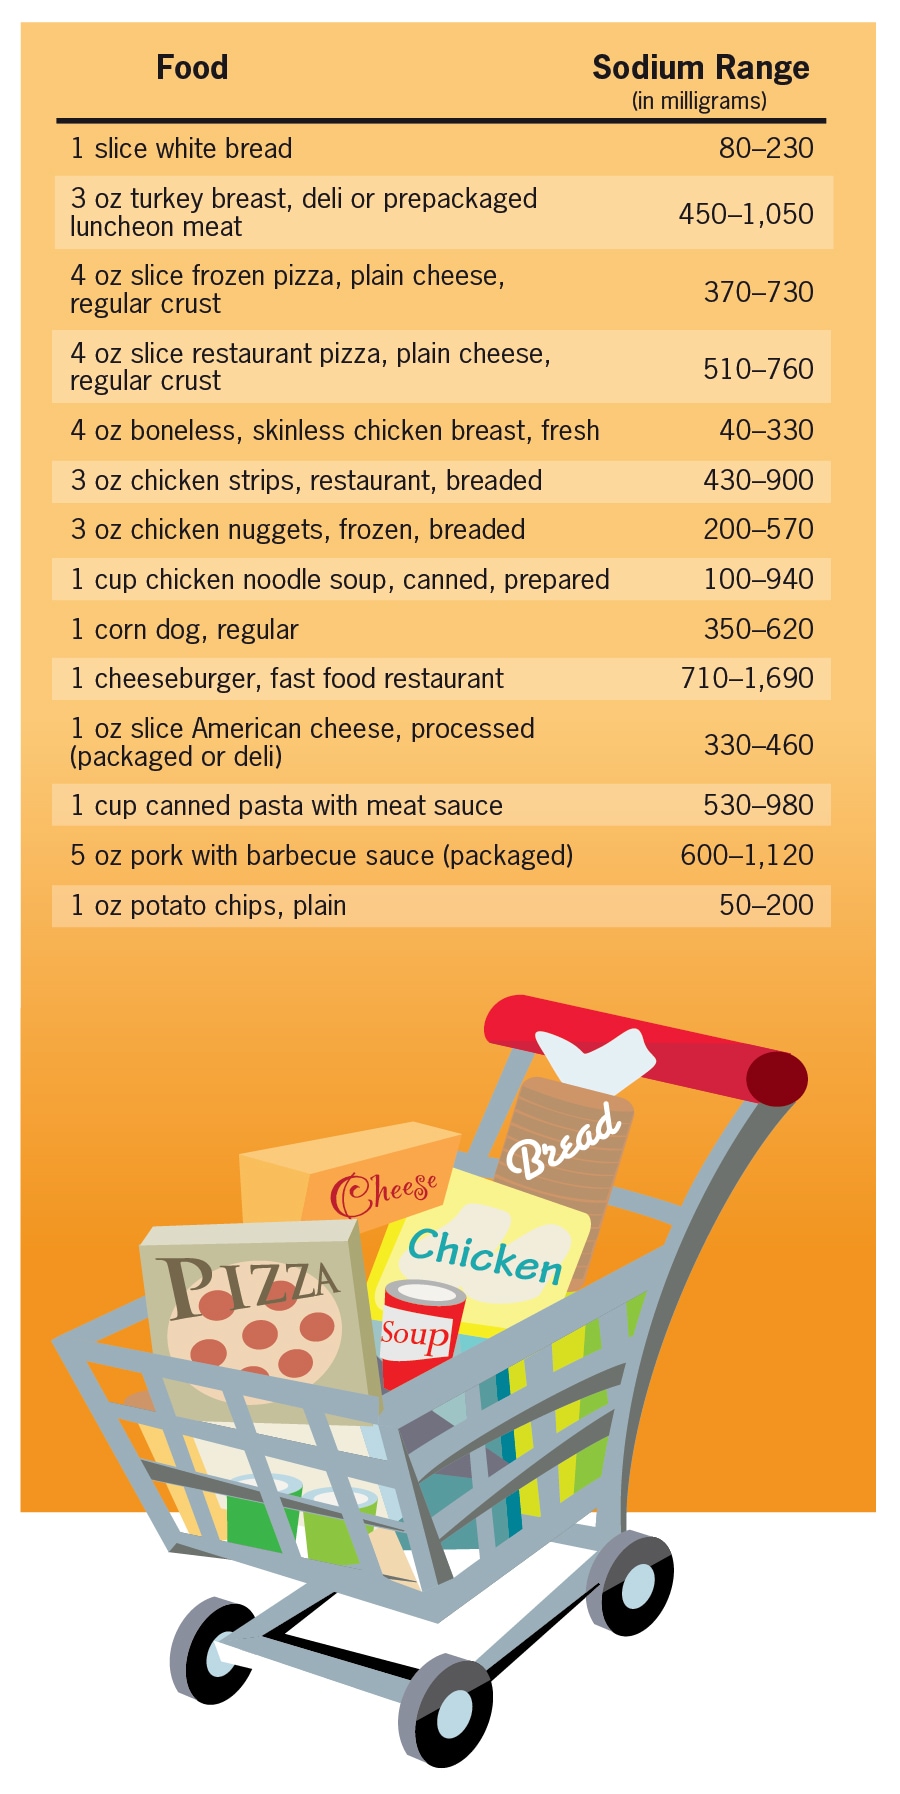 sodium-foods-chart